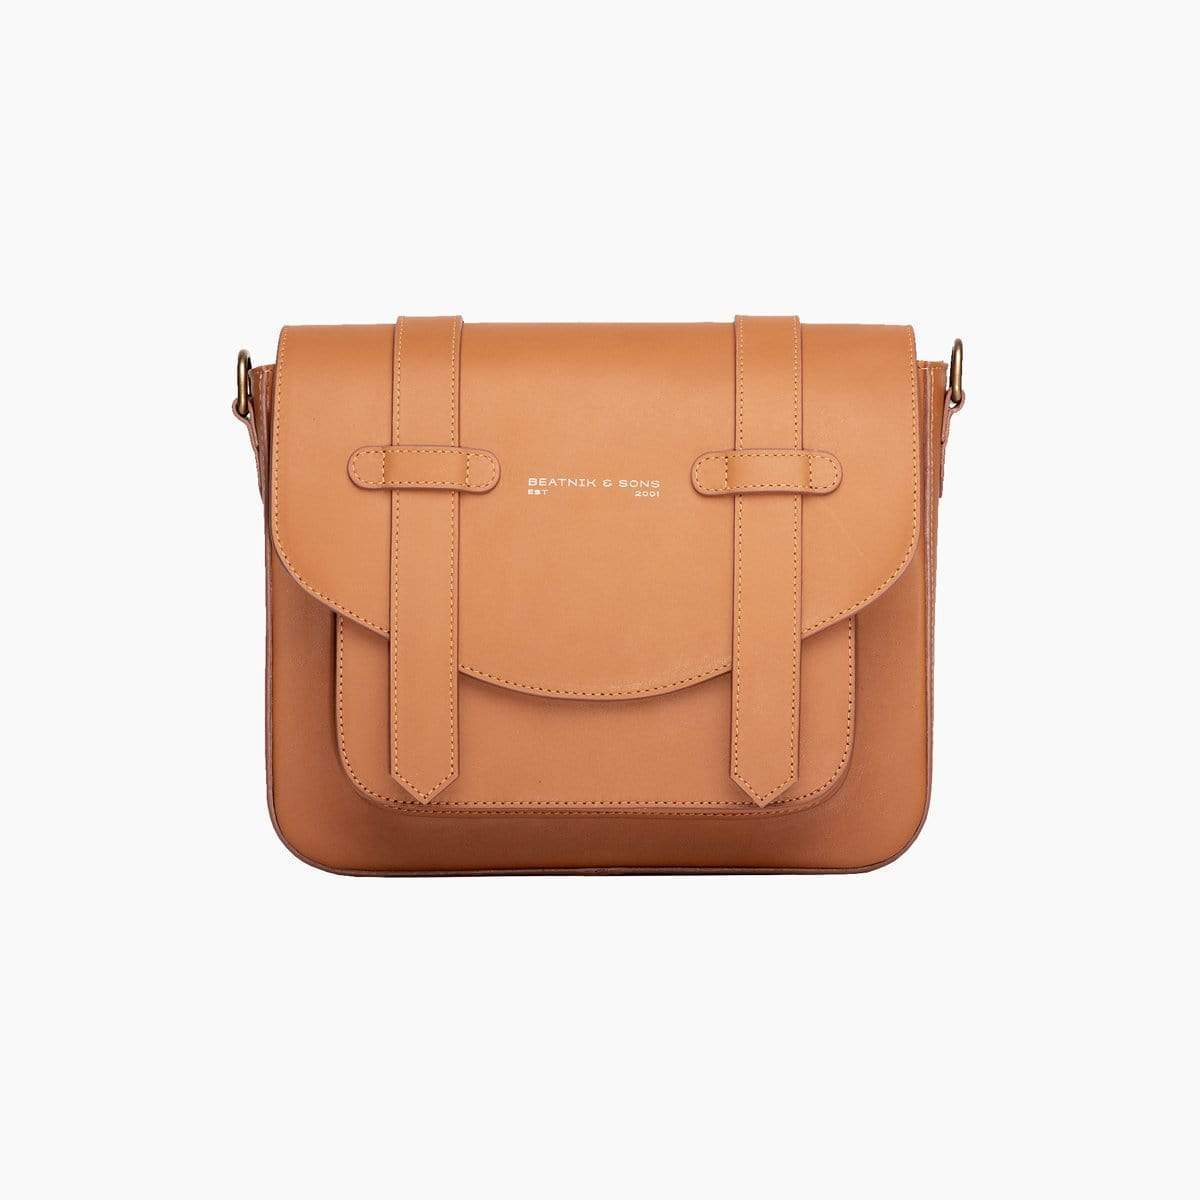 Beatnik & Sons Leather handbags Tan the Joan handbag